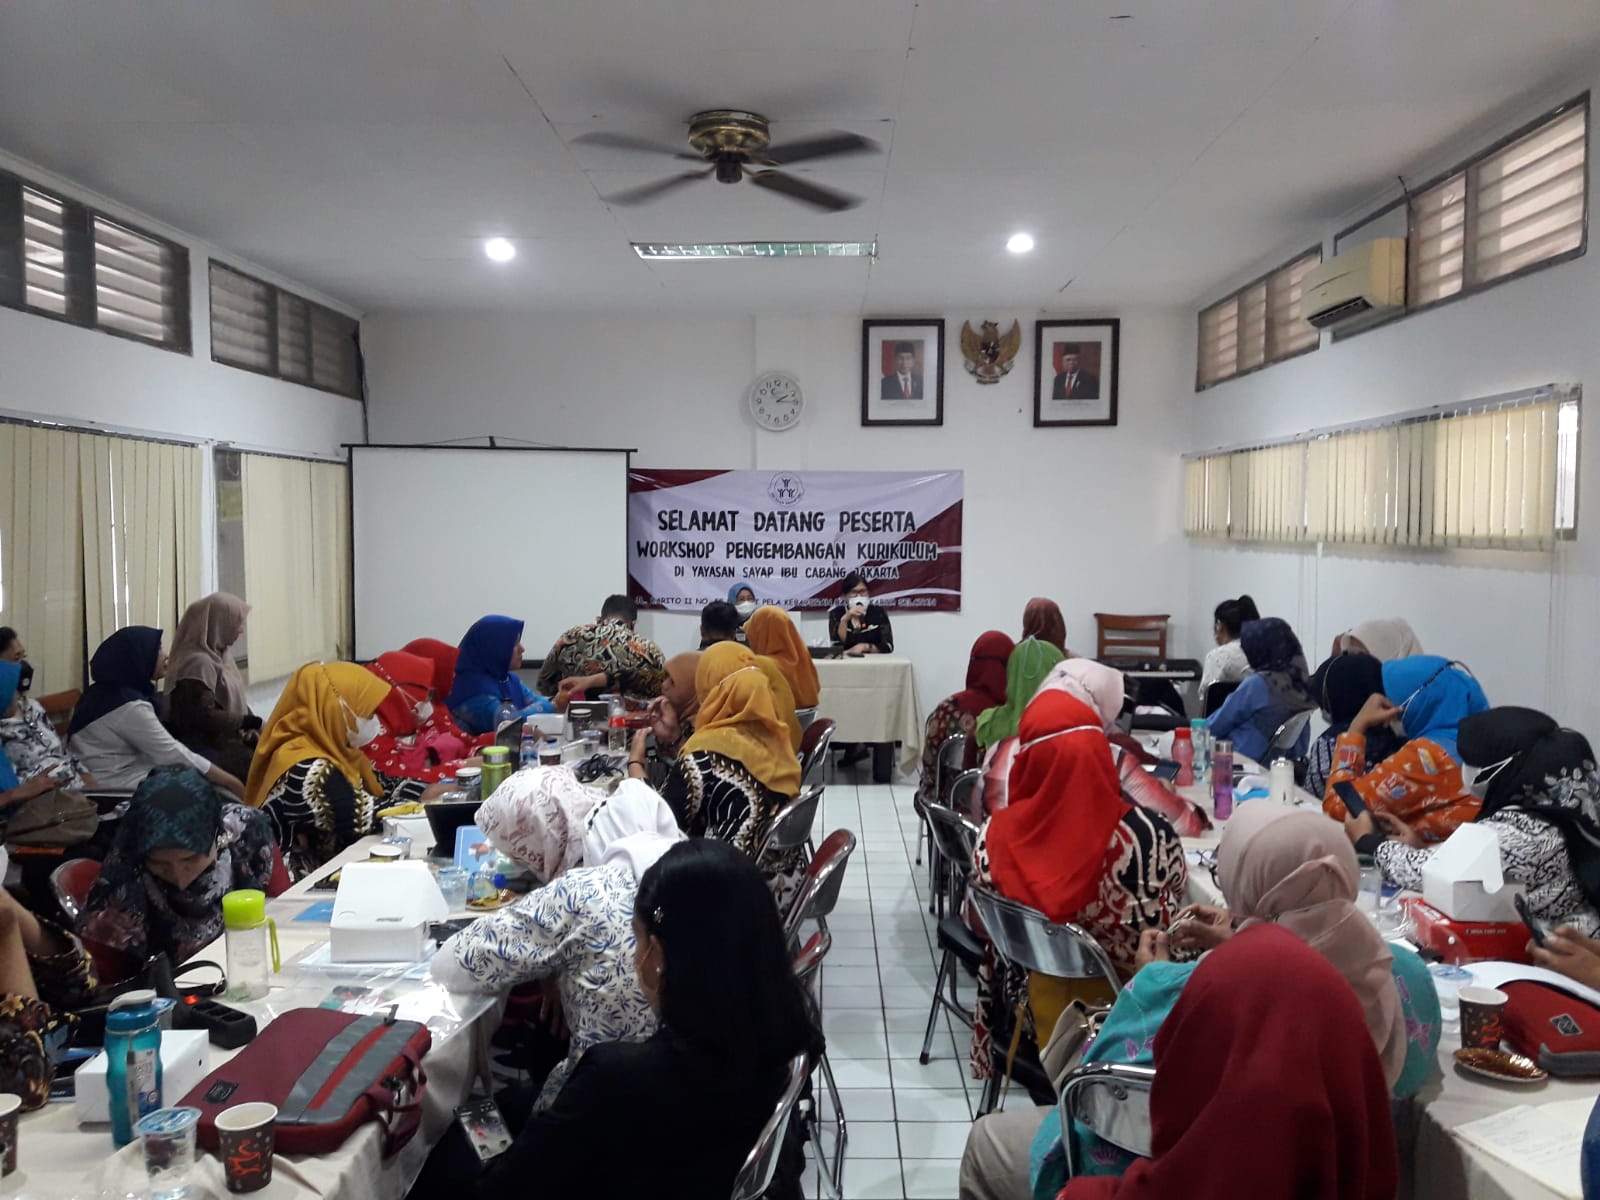 Read more about the article Workshop “Pengembangan Kurikulum Merdeka” di Yayasan Sayap Ibu Cabang Jakarta